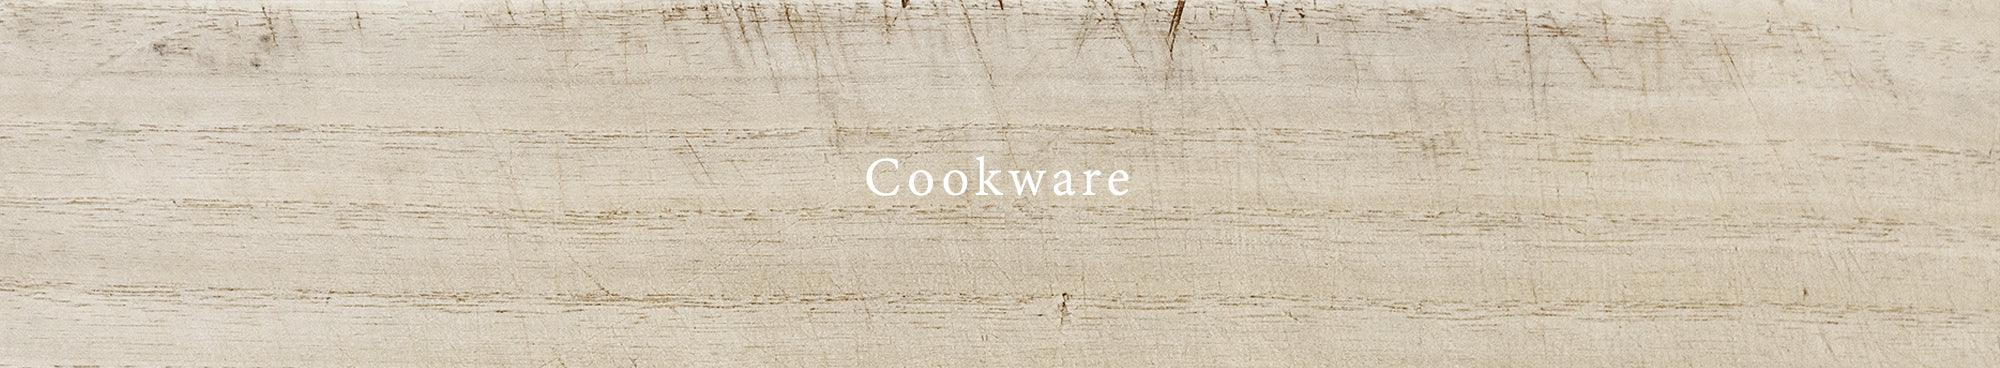 Cookware - Rikumo